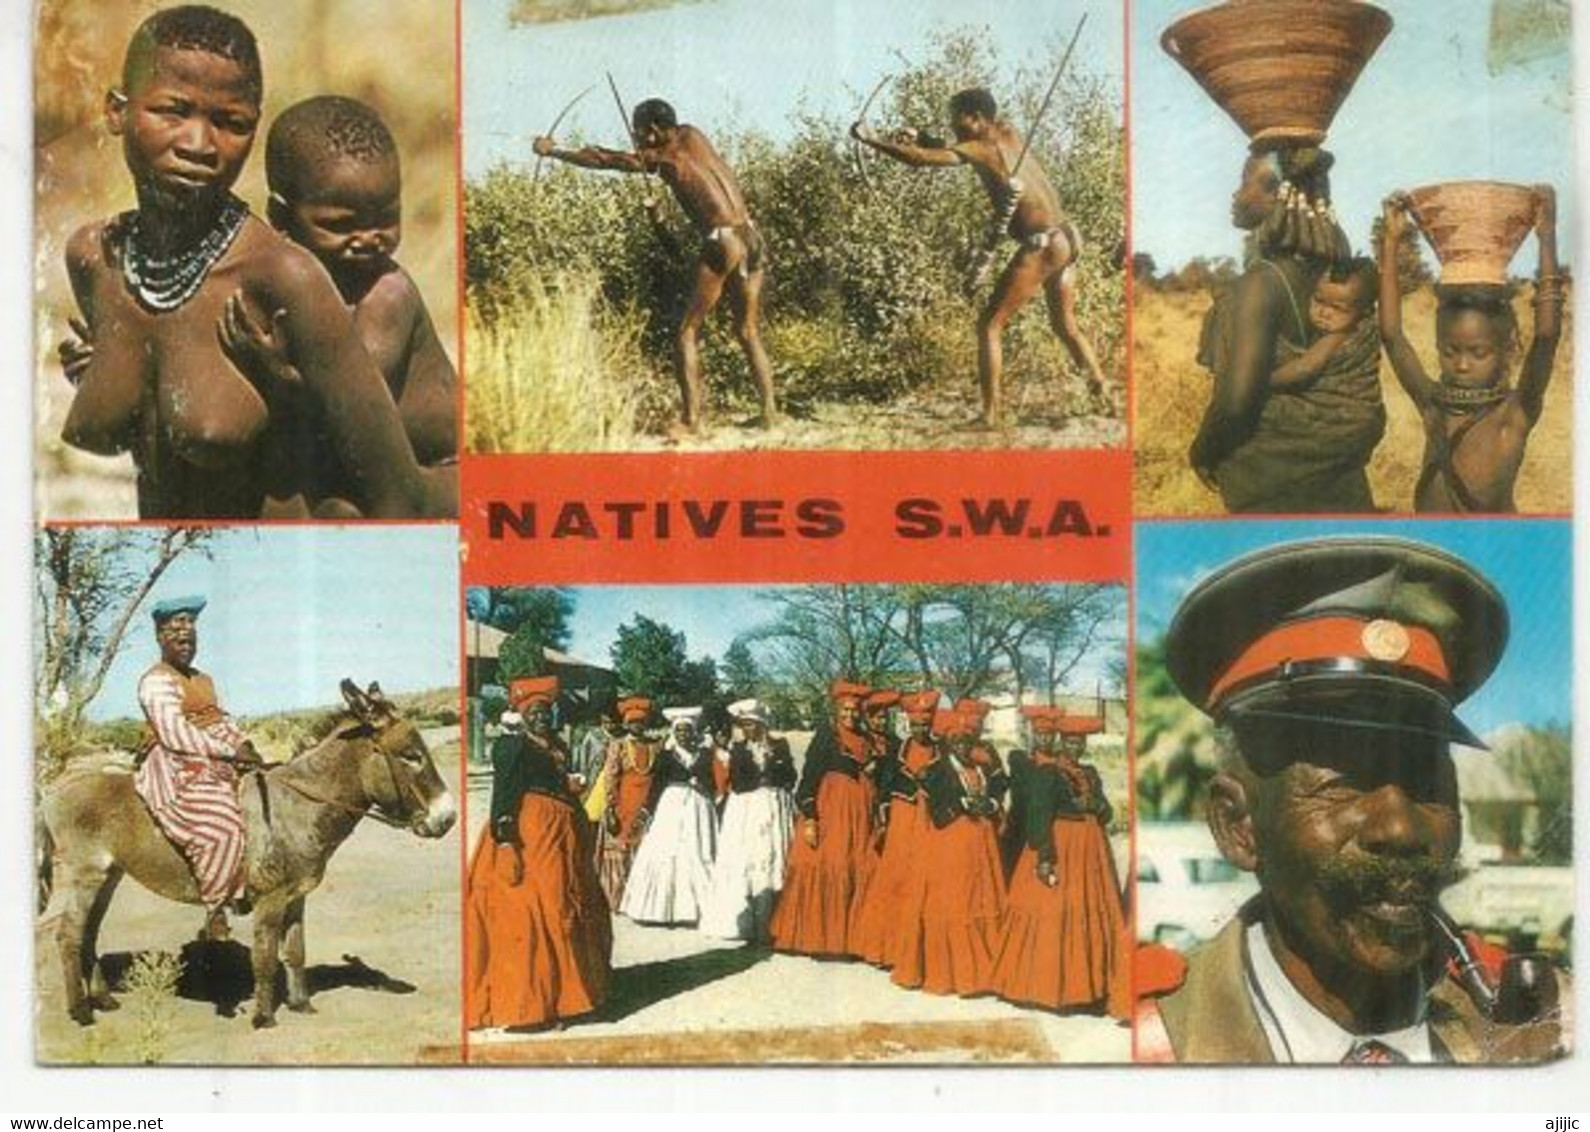 Natives S.W.A , Carte Postale Du Sud-Ouest Africain, Adressée à Andorra - Namibia